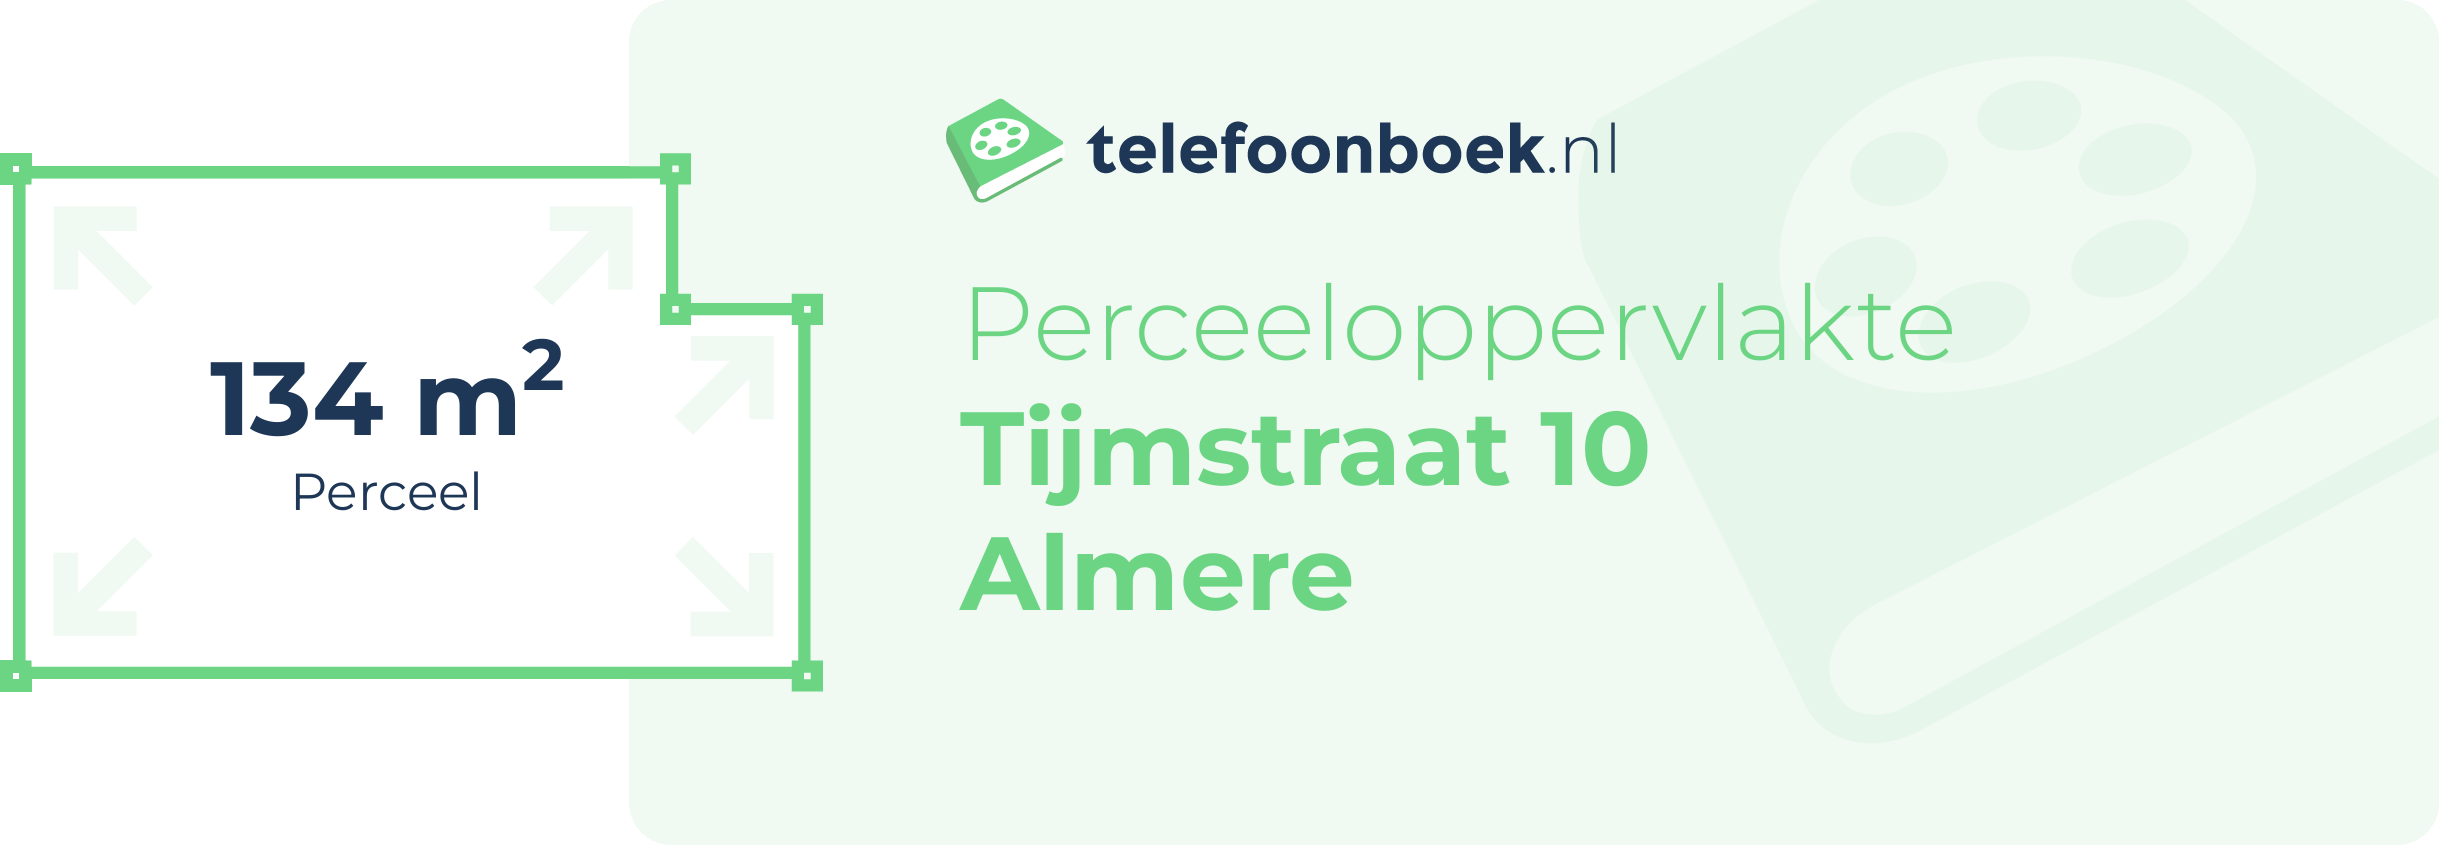 Perceeloppervlakte Tijmstraat 10 Almere